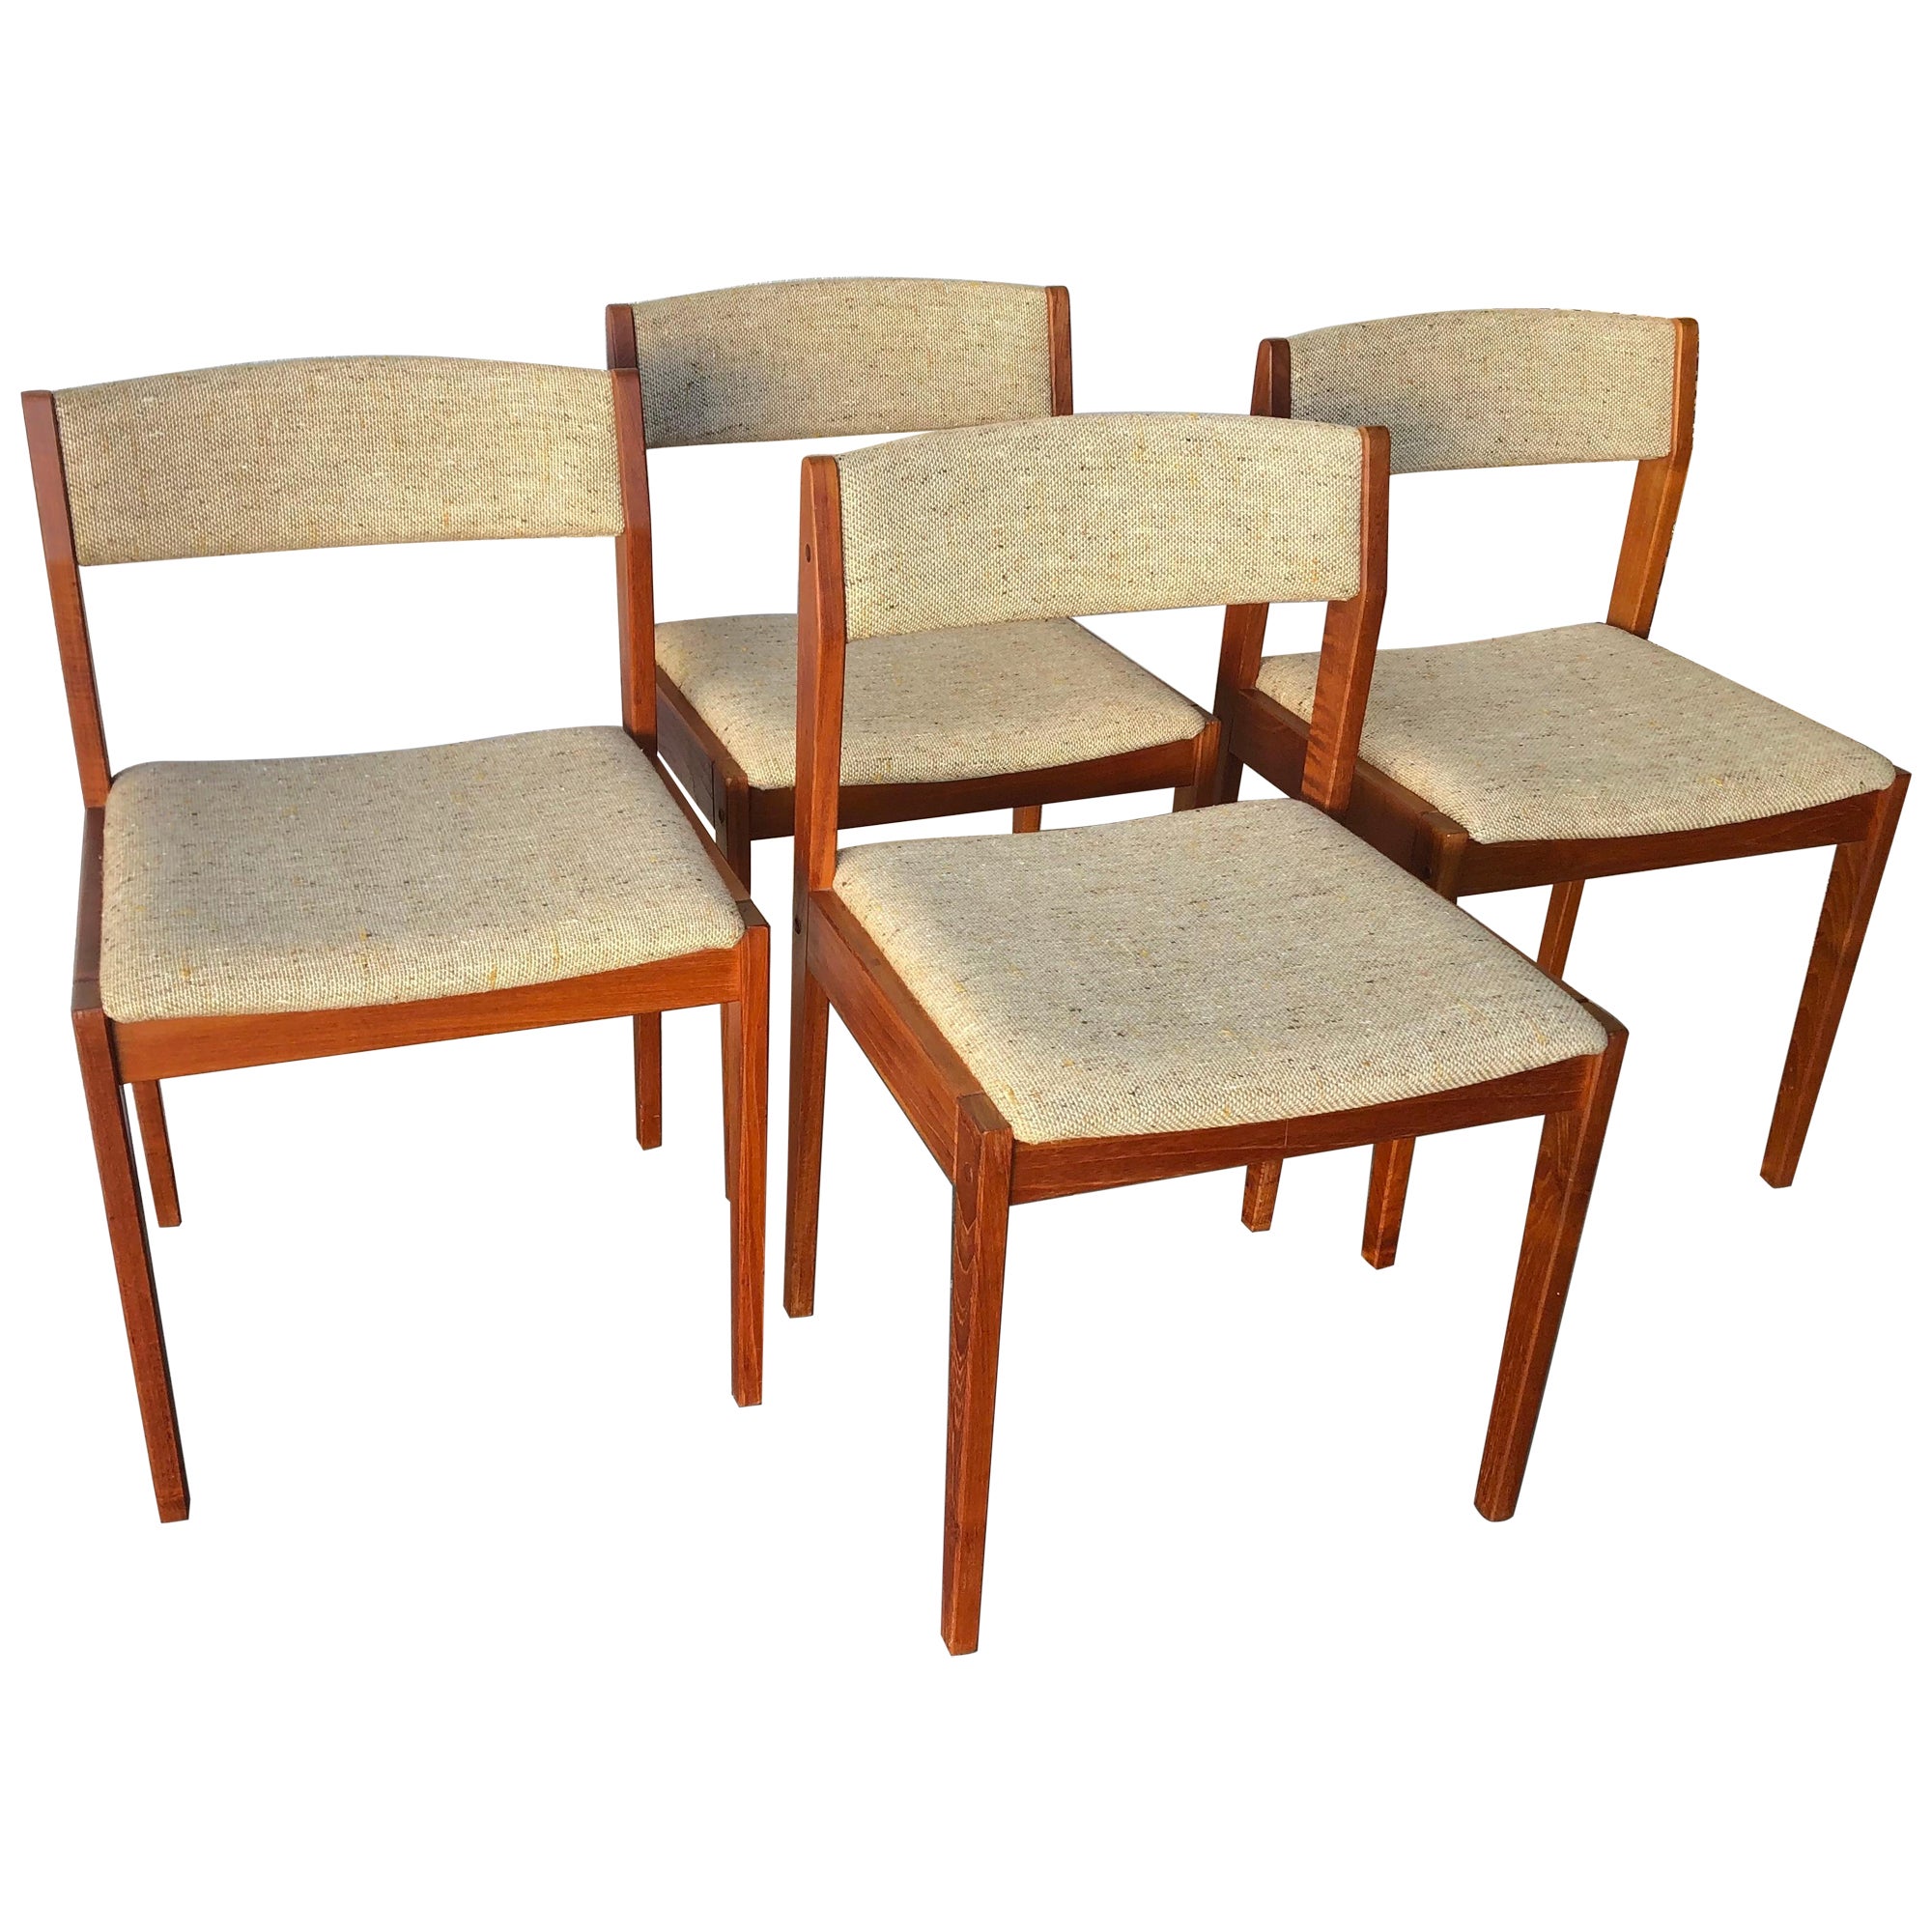 Set of Four Mid Century Danish Modern Dining Chairs by Tarm Stole Mobelfabrik